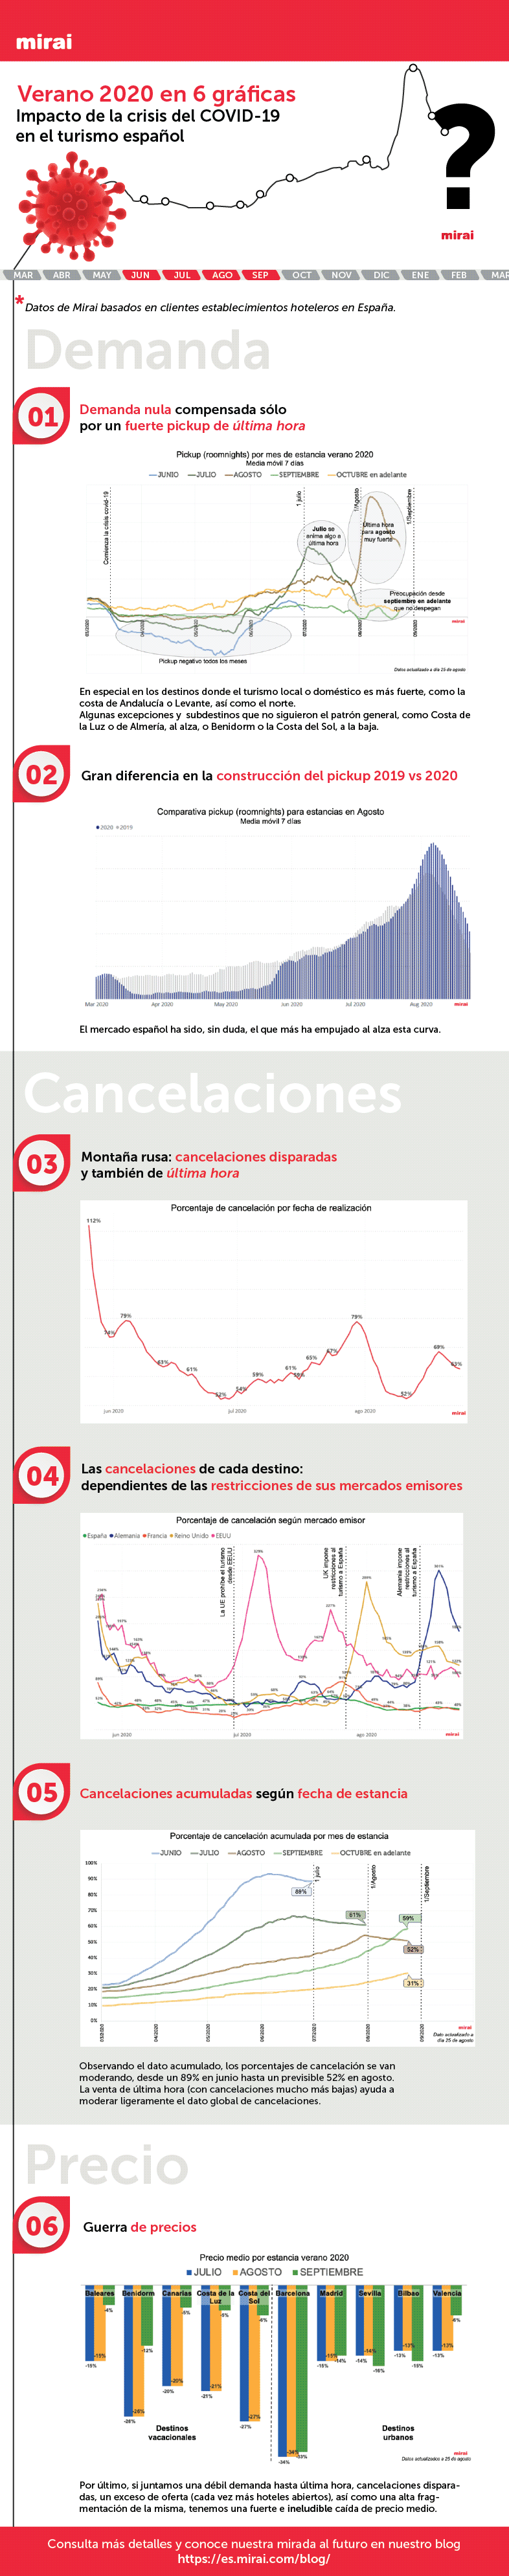 infografico-impacto-coronavirus-turismo-hoteles-verano-espana